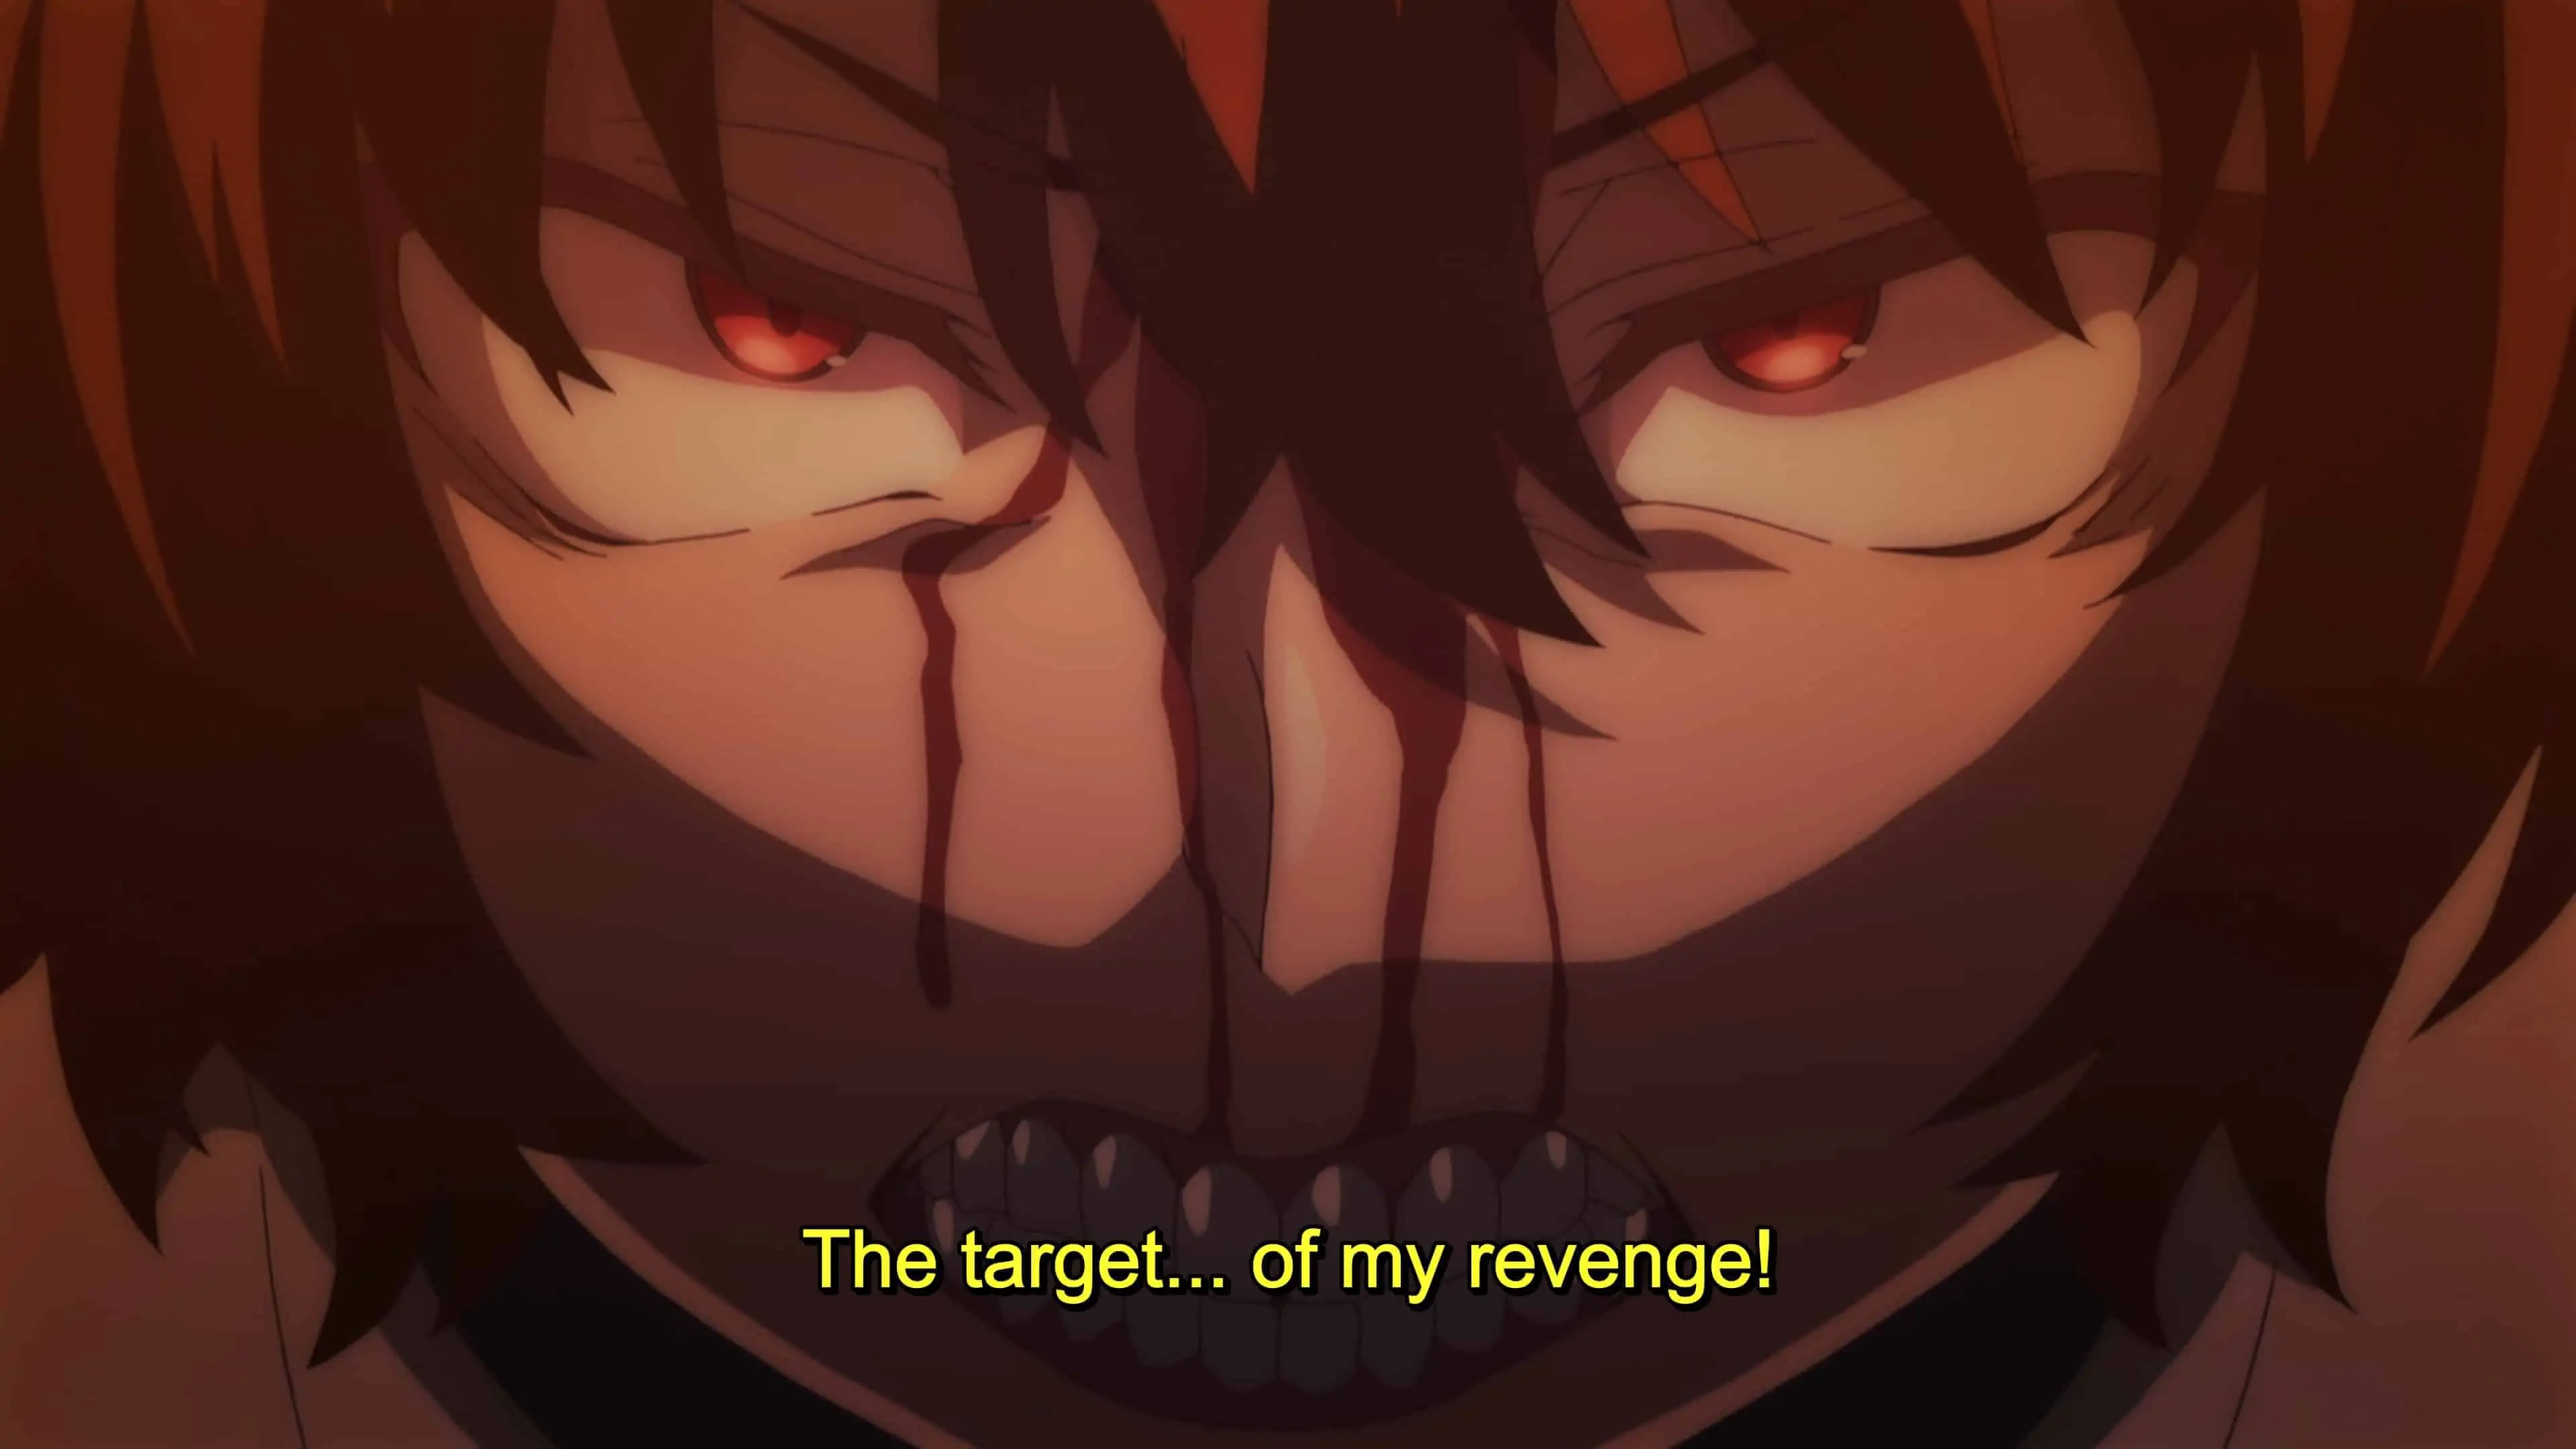 Keyaru swearing vengeance